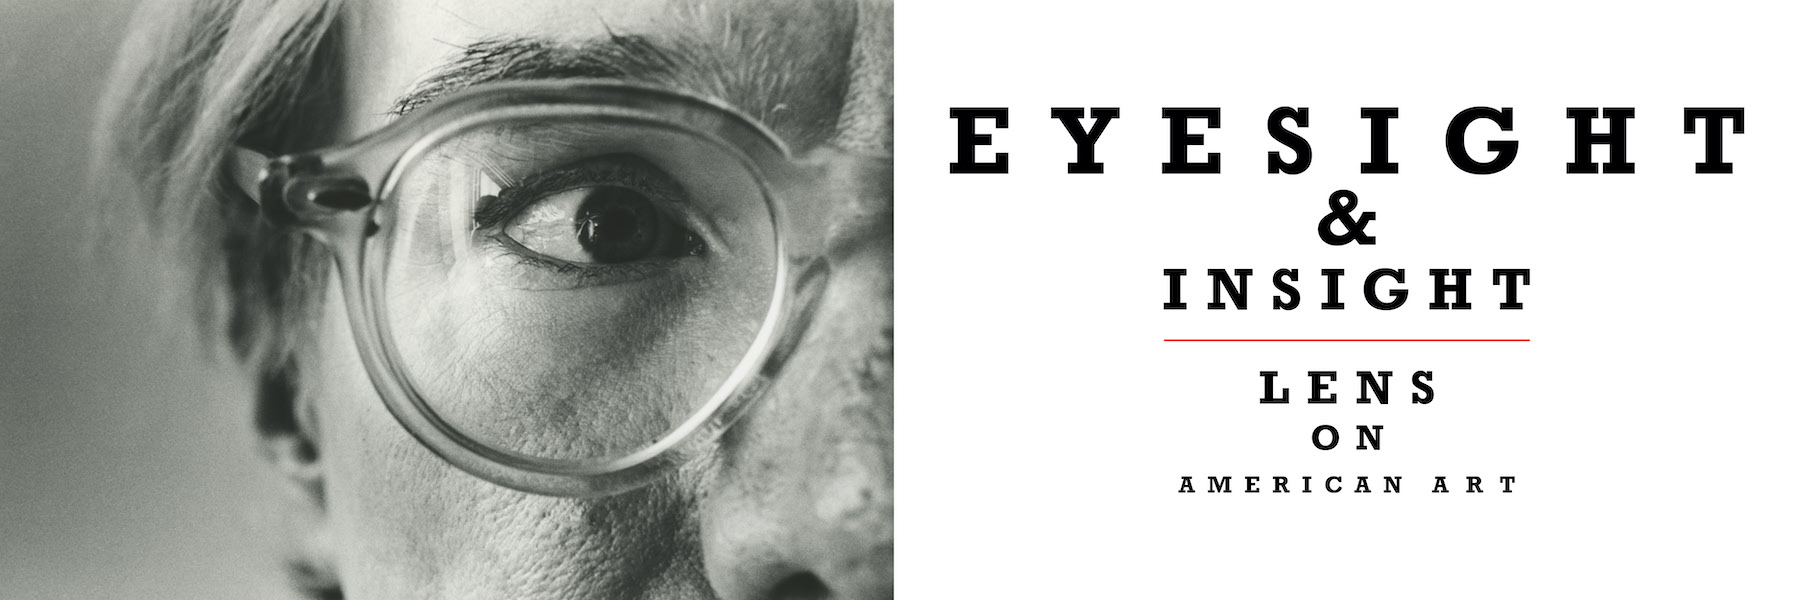 Online Exhibition "Eyesight & Insight: Lens on American Art" 